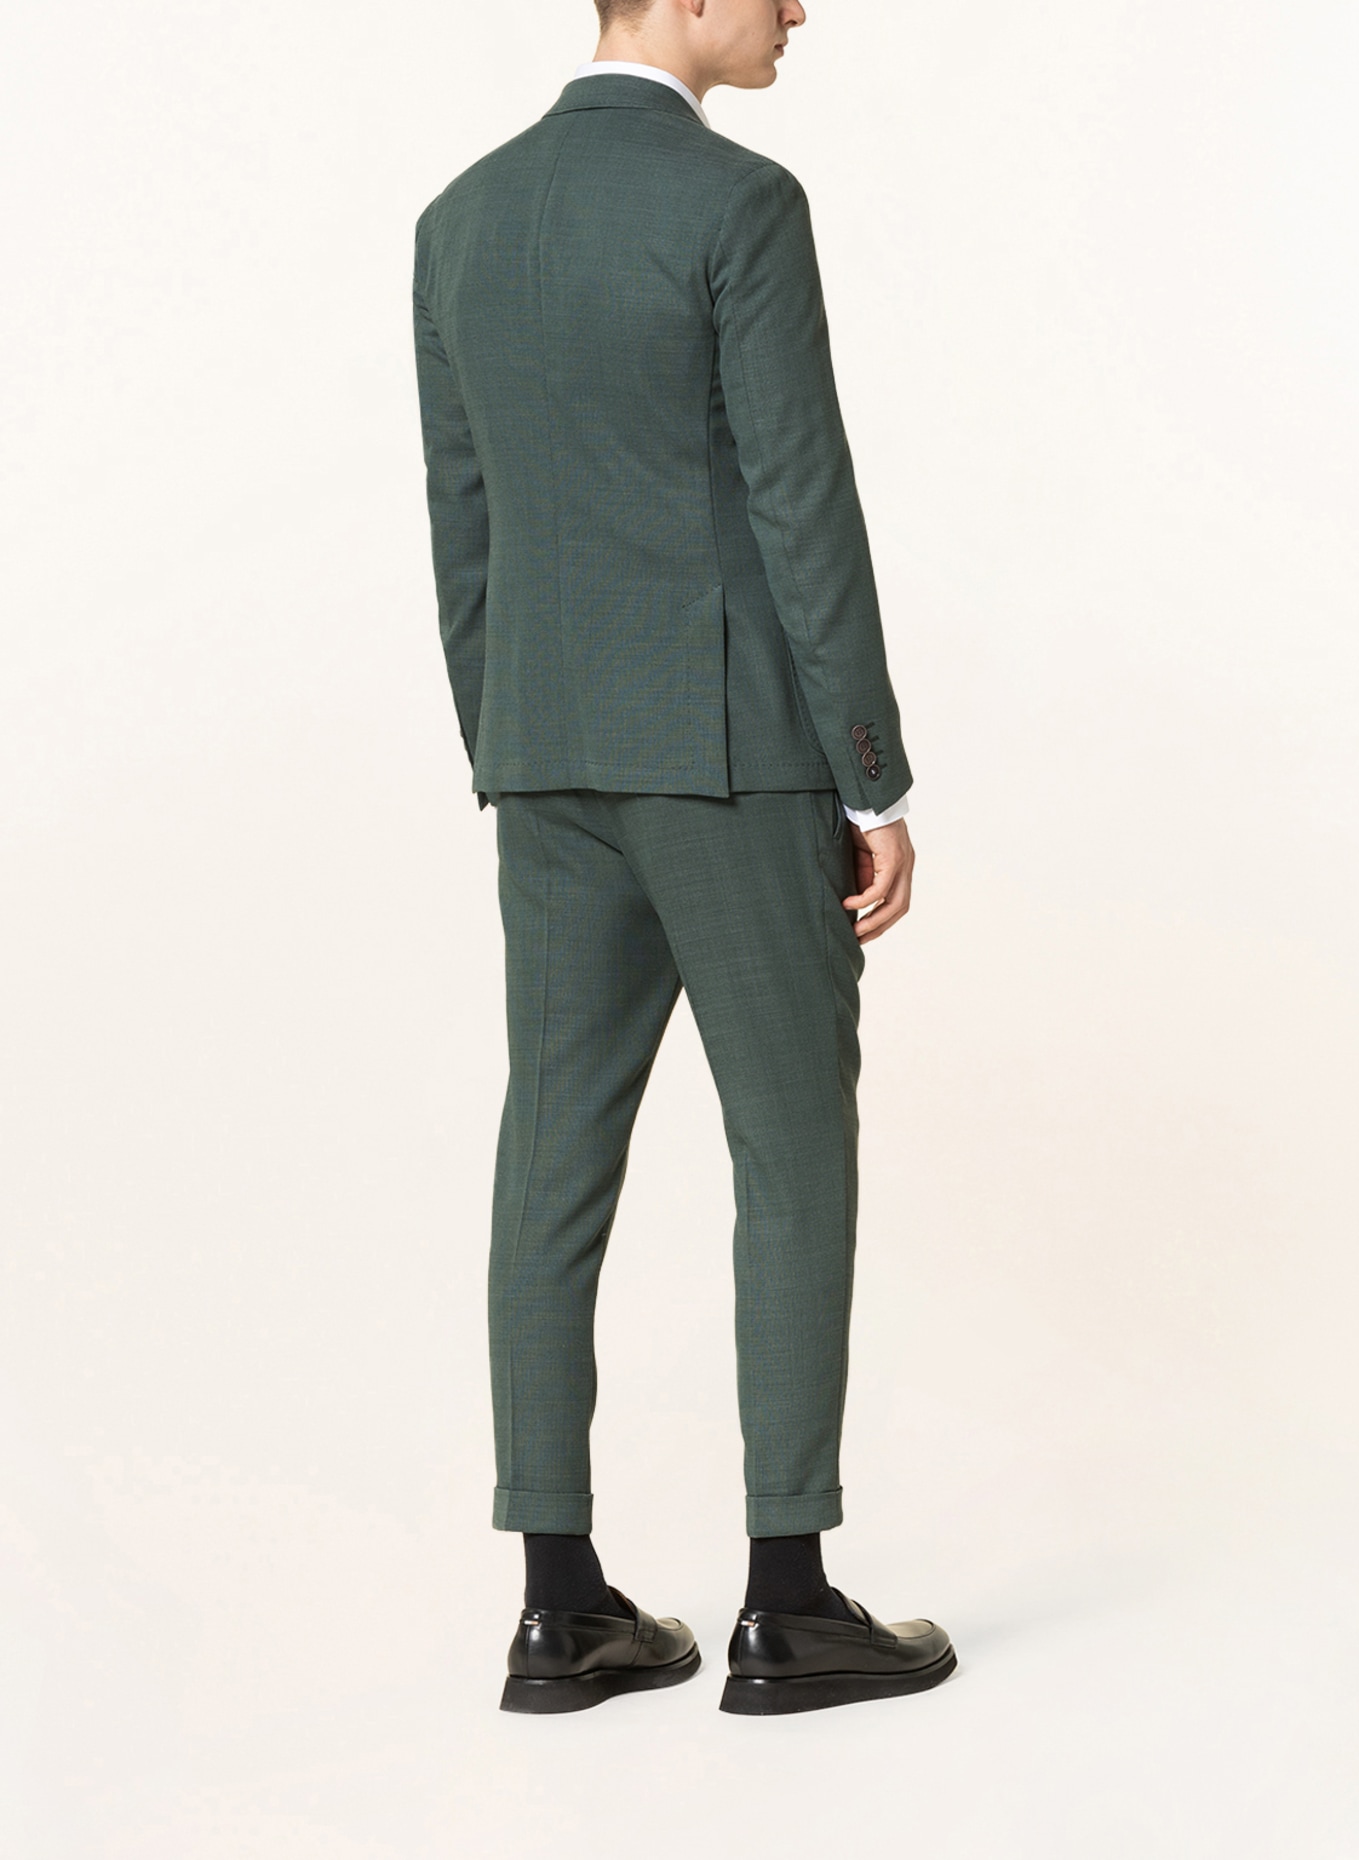 STRELLSON Anzugsakko ACON Slim Fit, Farbe: 310 Medium Green               310 (Bild 3)